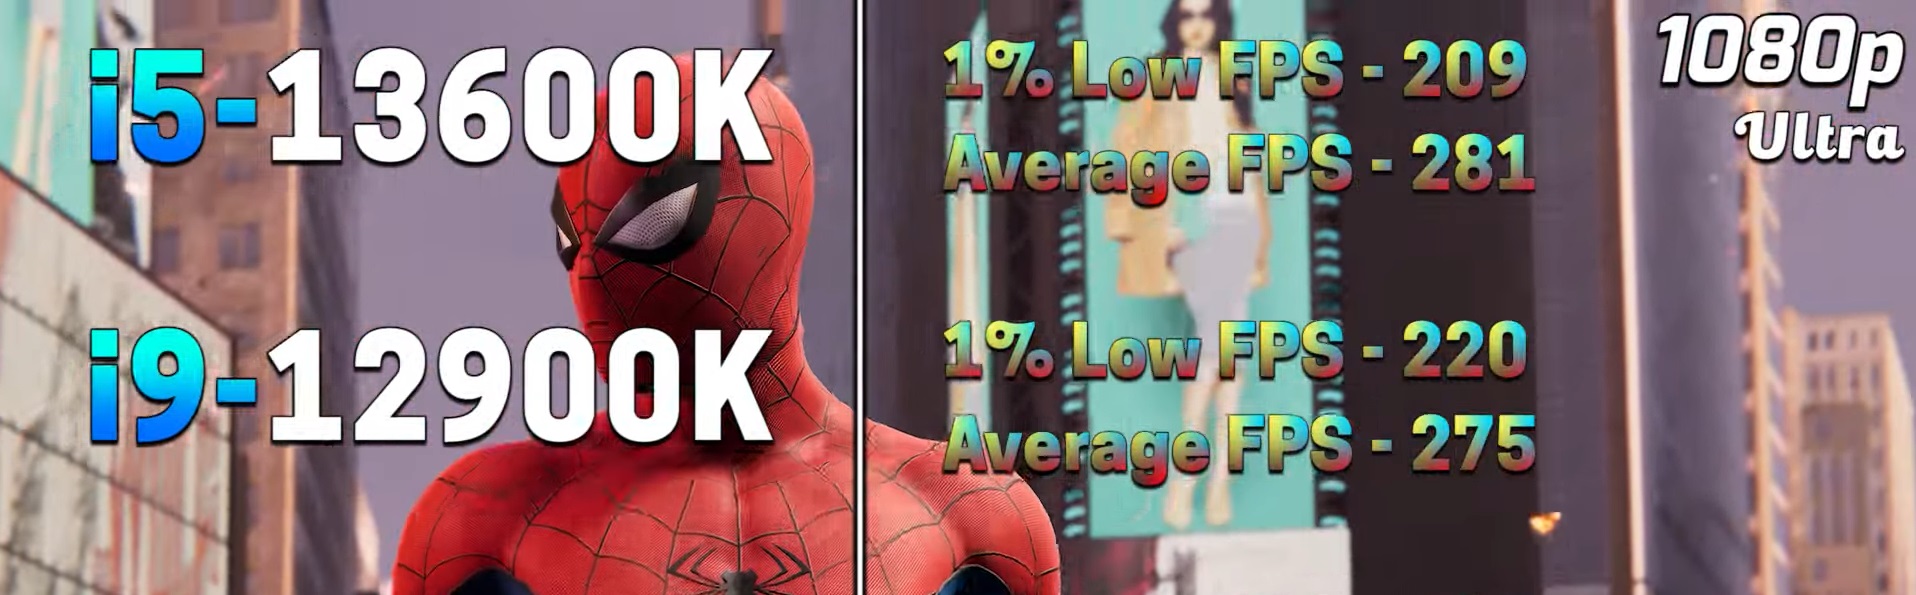 Marvel's Spiderman remastered 1080p benchmark